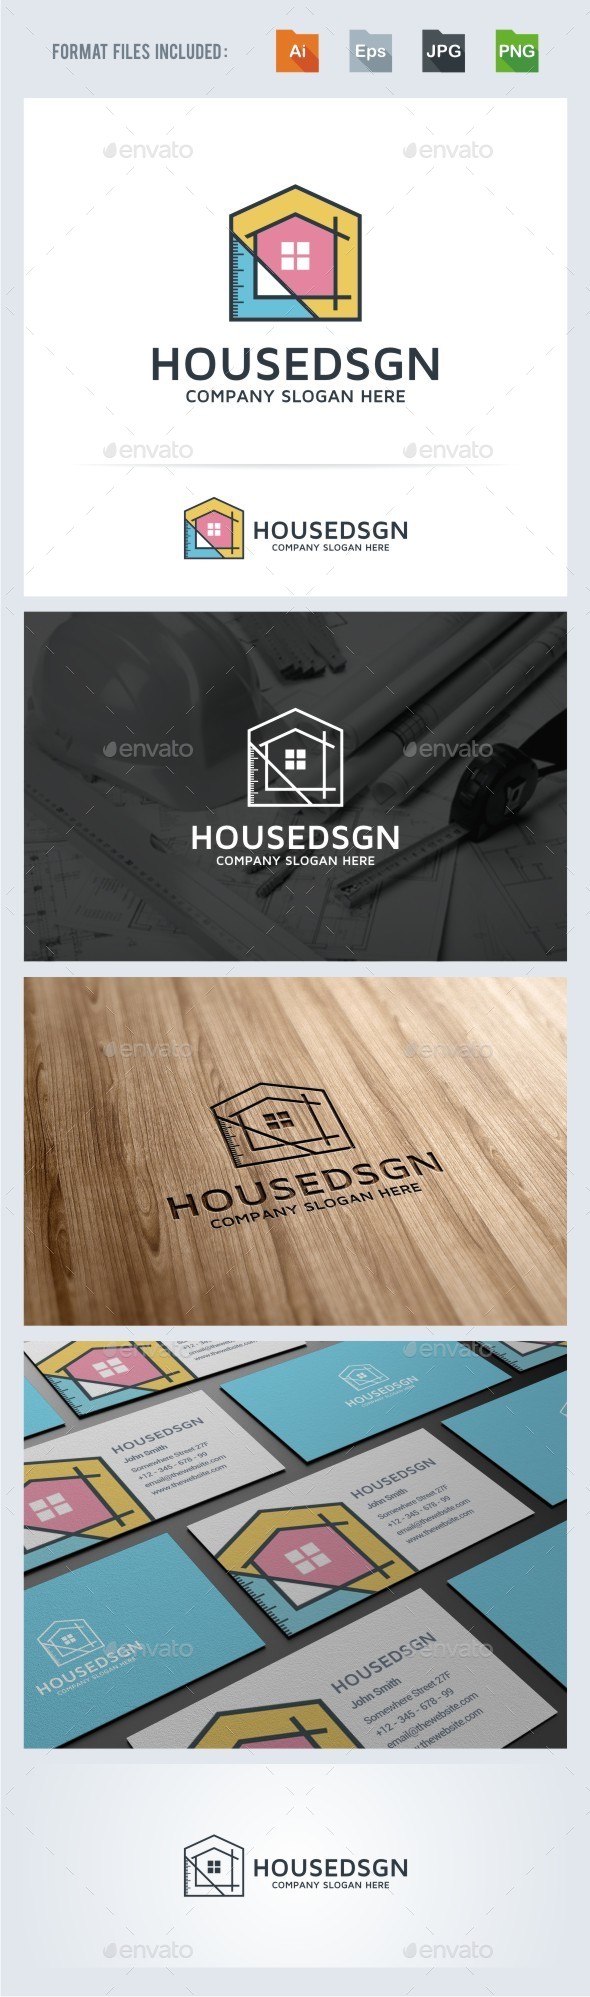 House Design - Architecture Logo Template